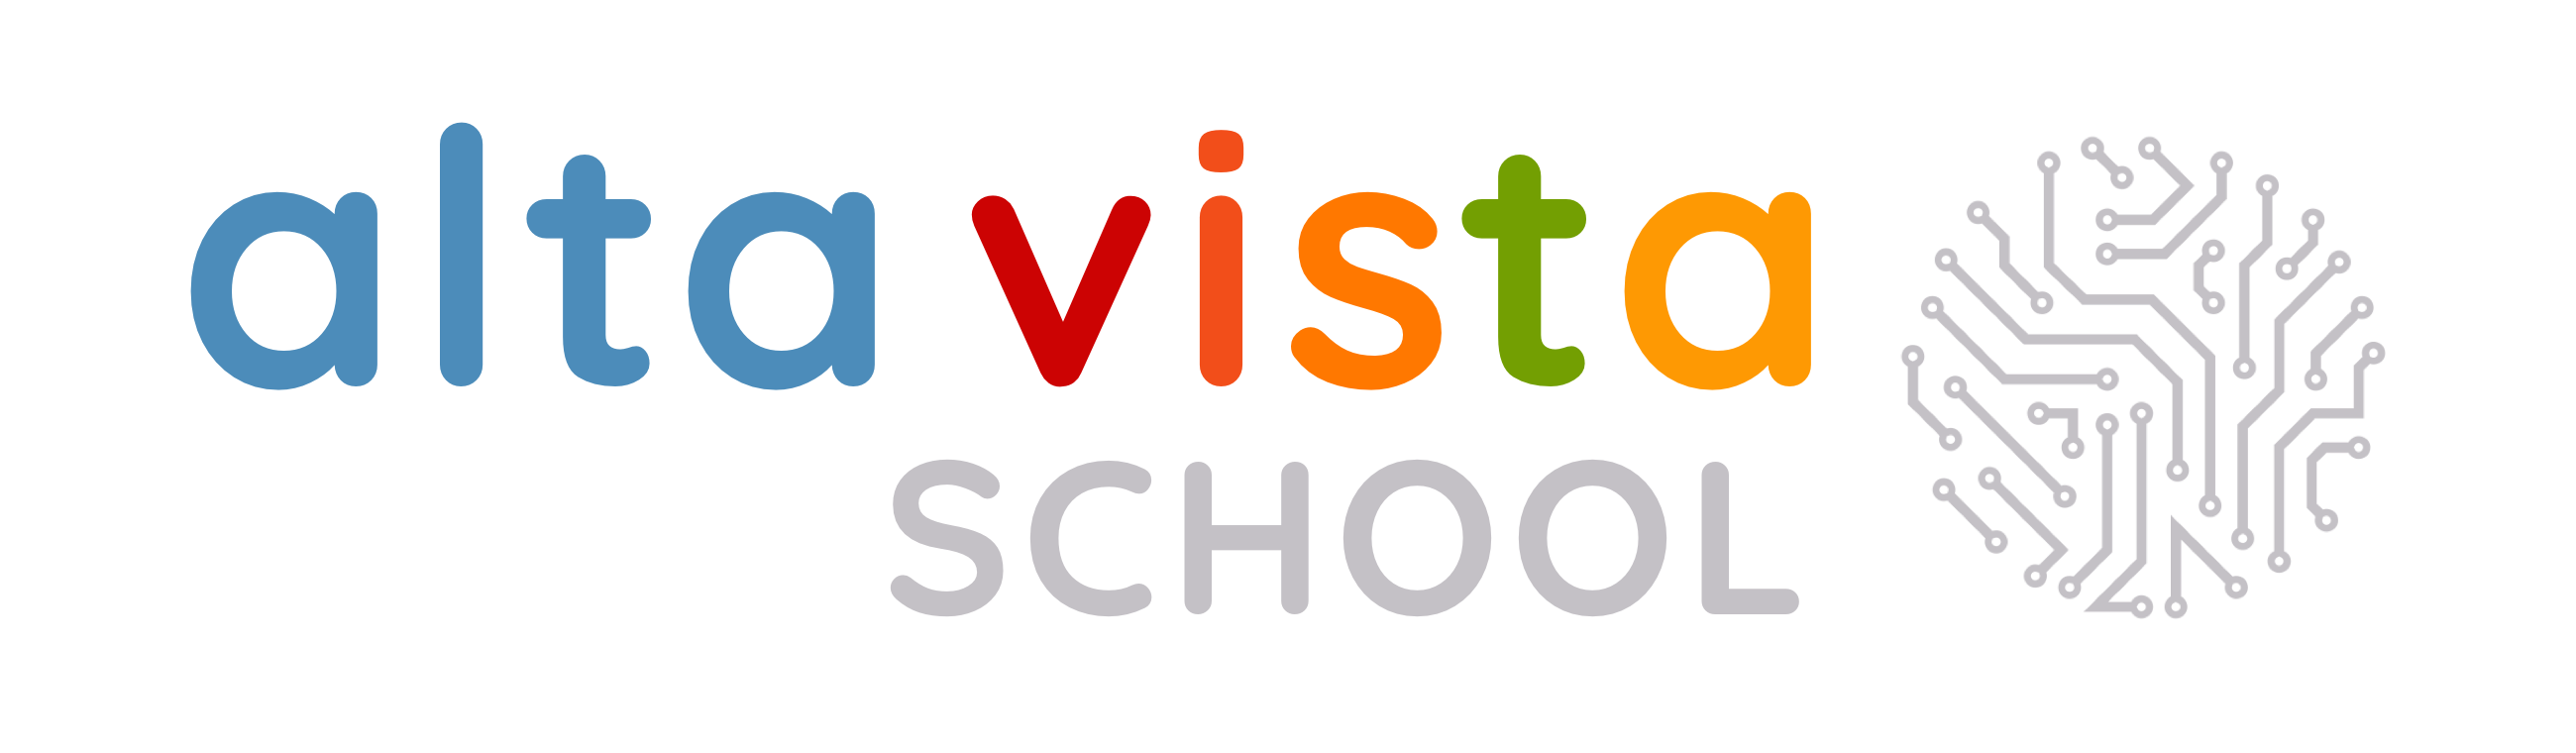 Alta Vista School